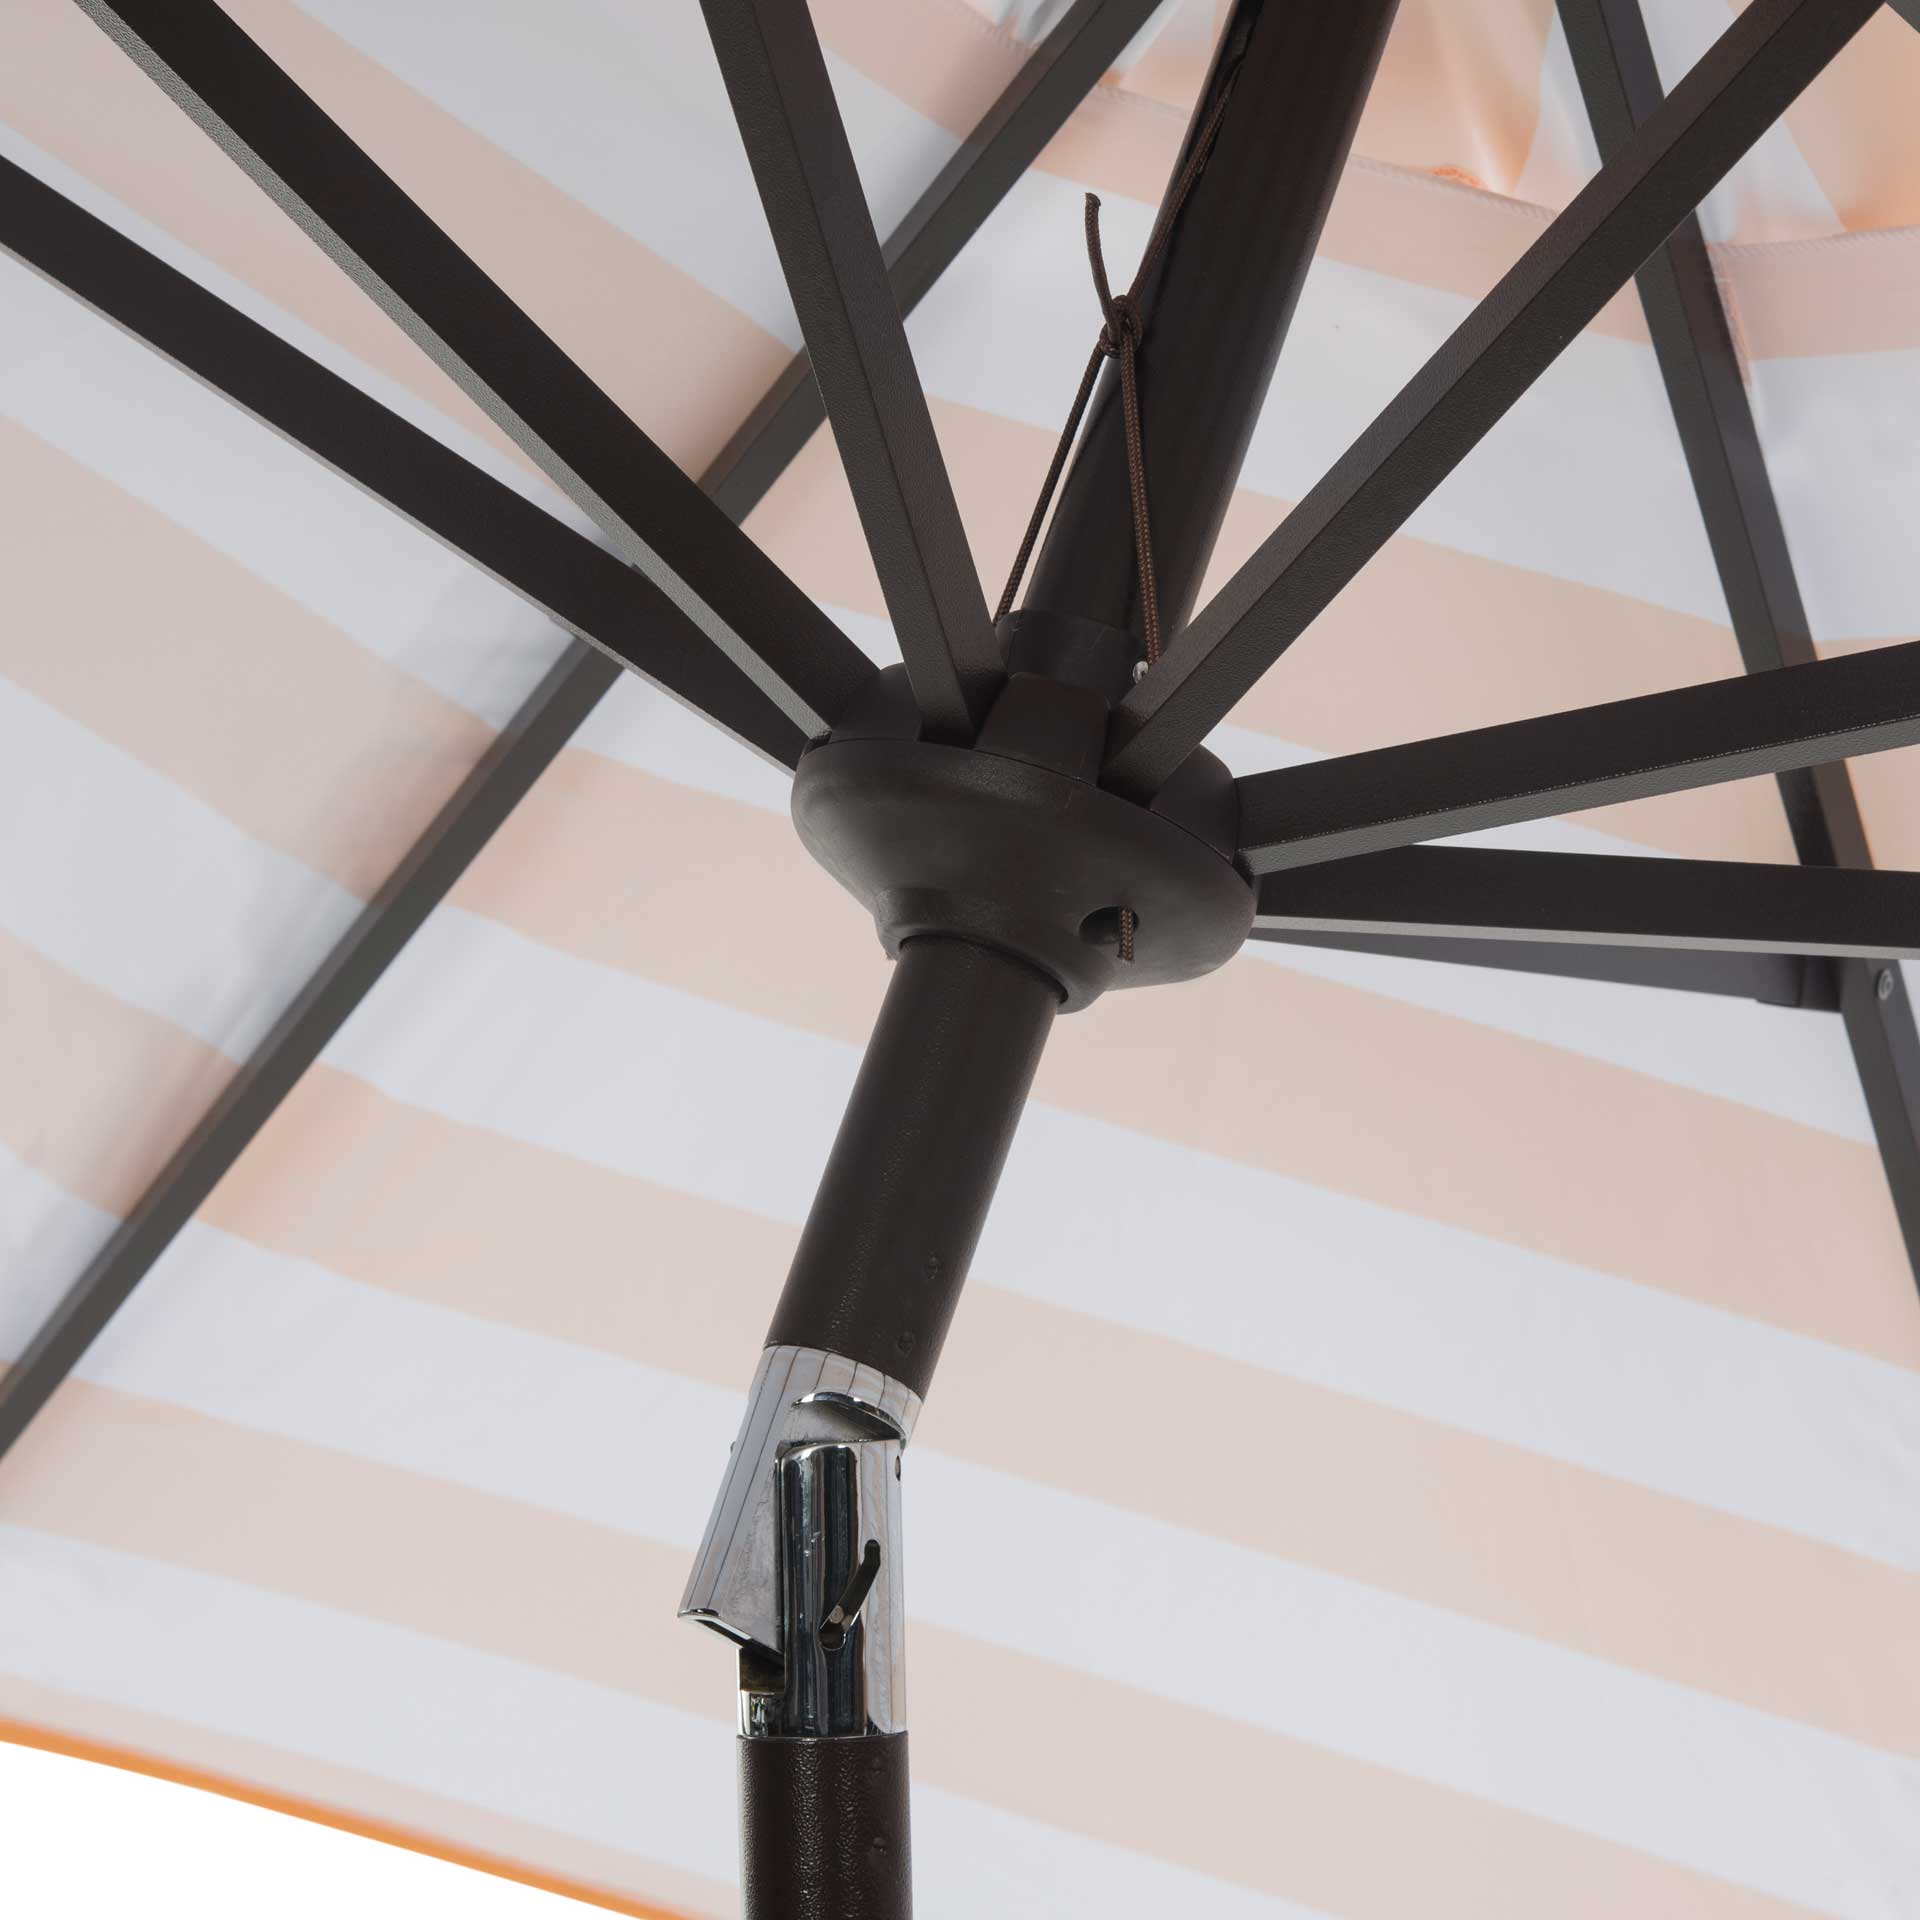 Irvin Uv Resistant Auto Tilt Umbrella Orange/White